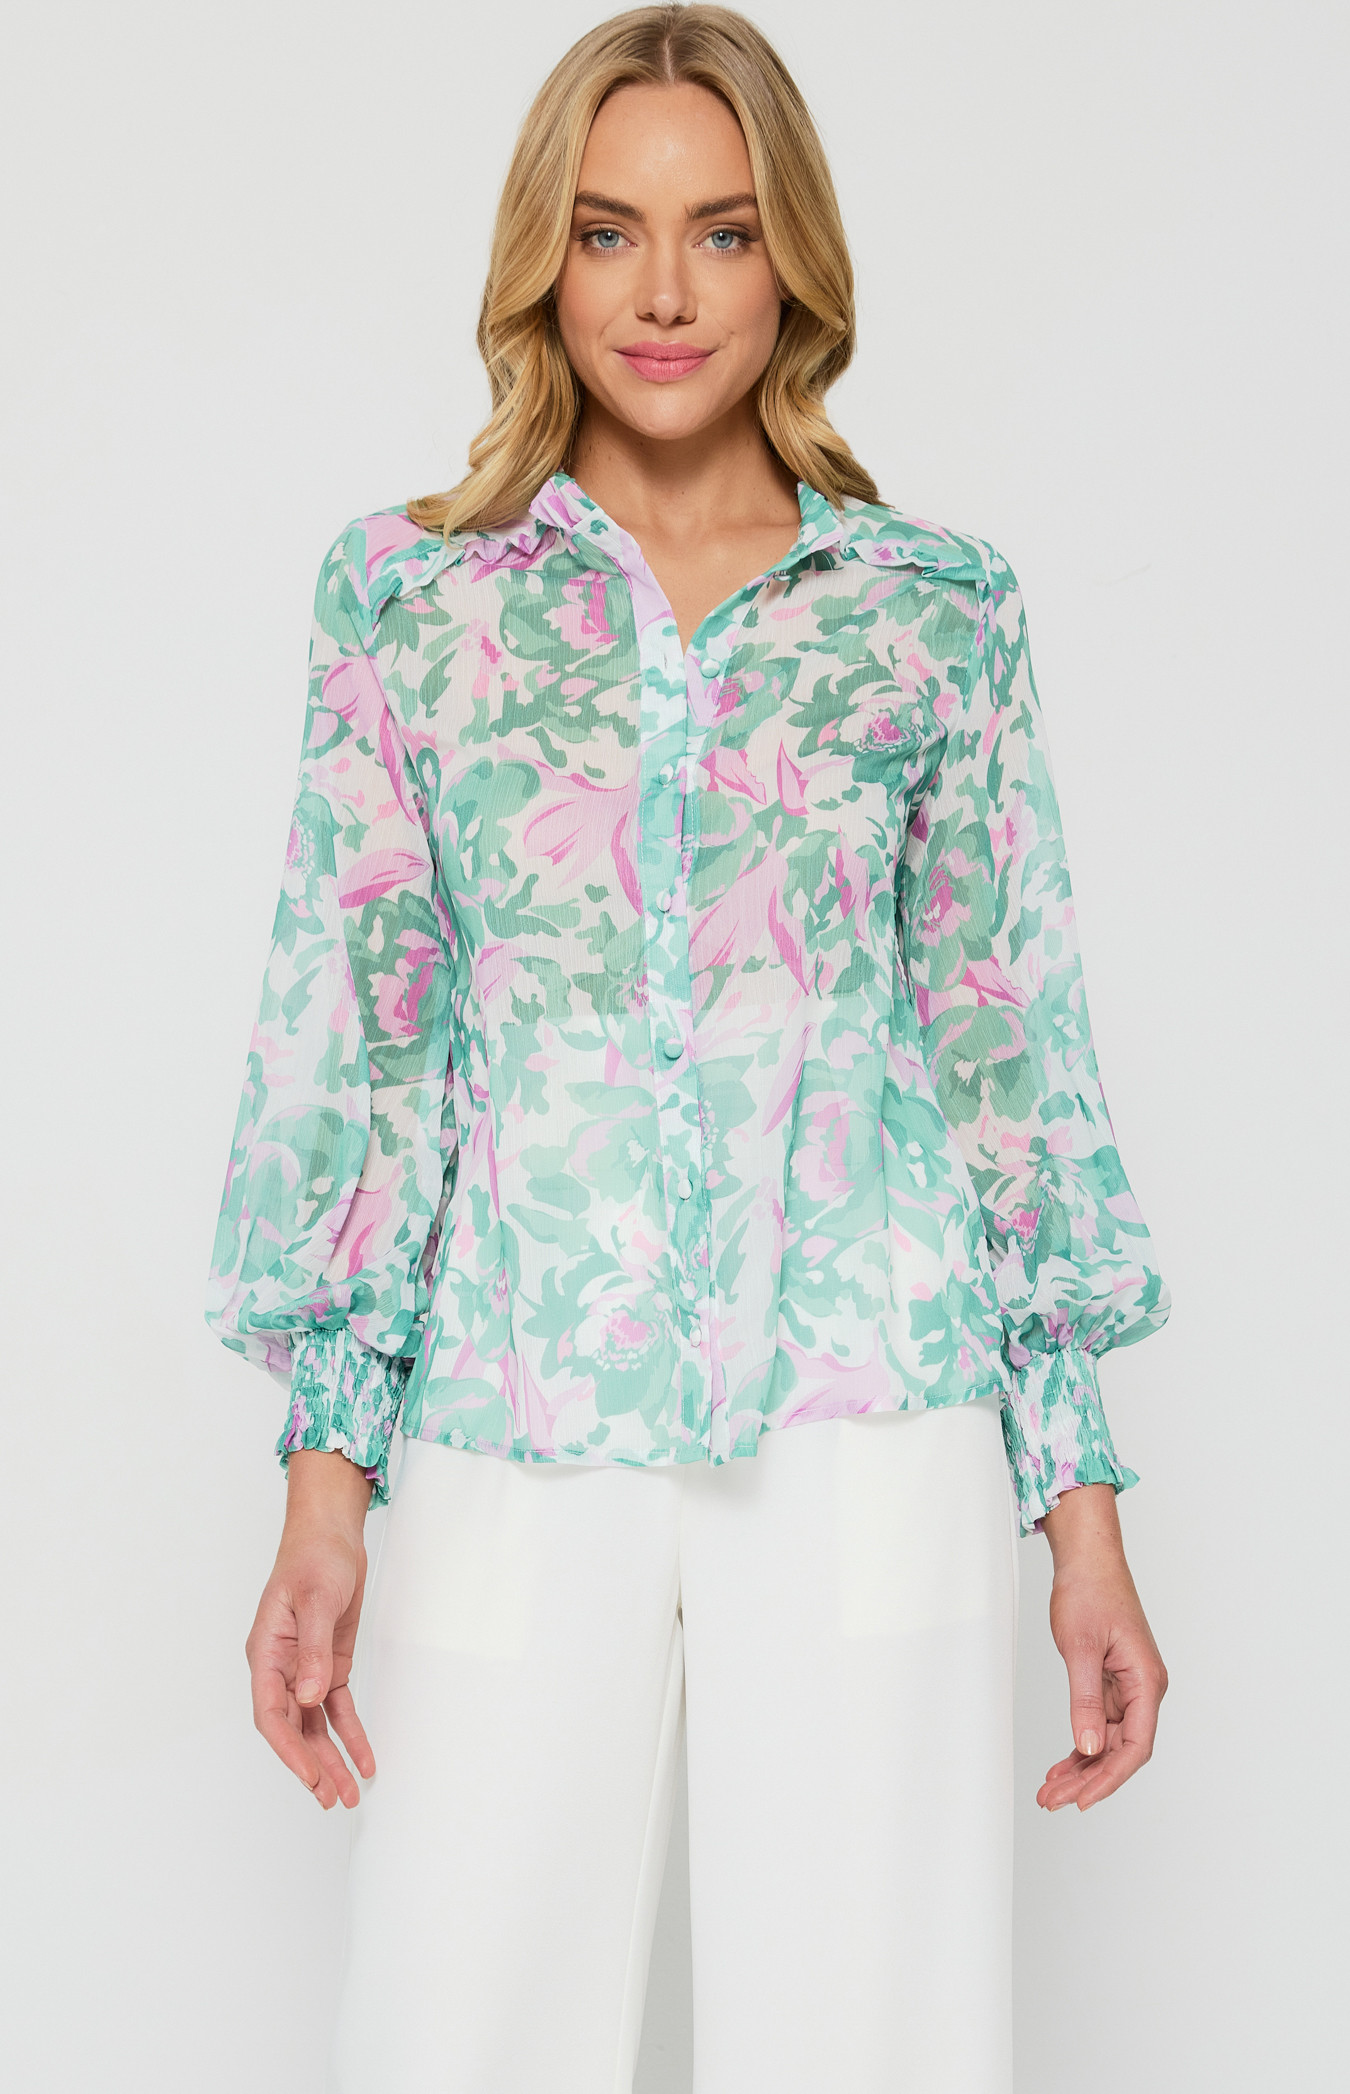 Floral Printed Sheer Chiffon Shirt with Ruffle Details (STO654B)